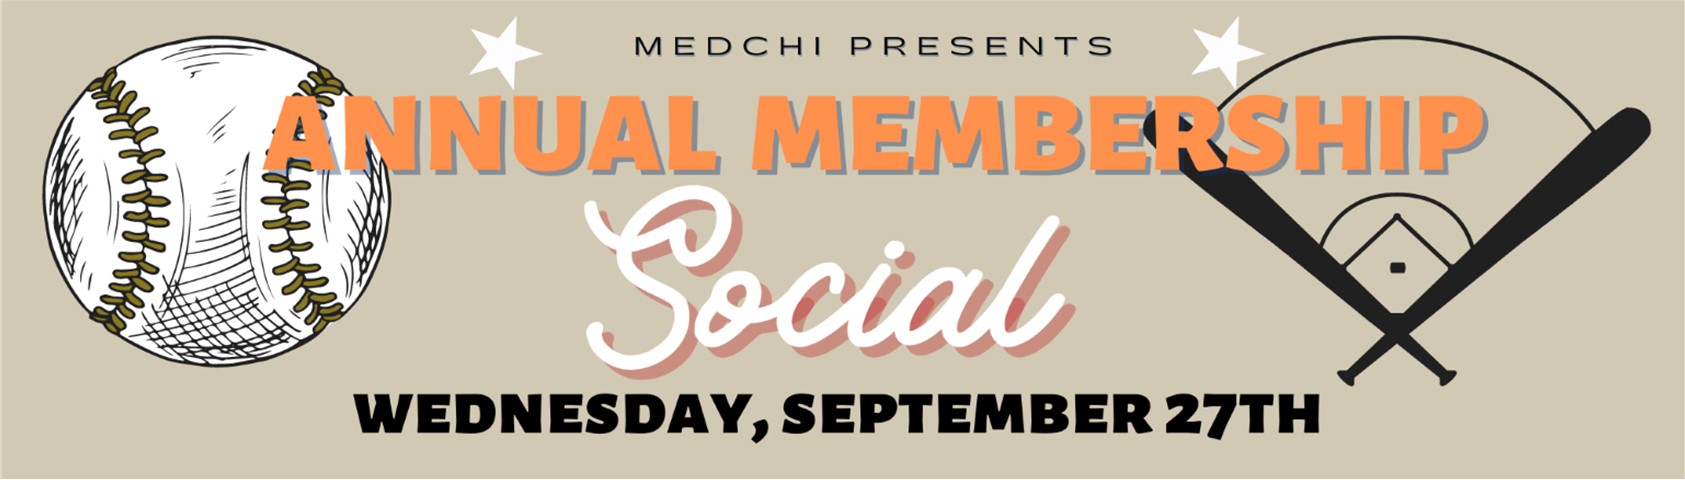 Annual Membership Social